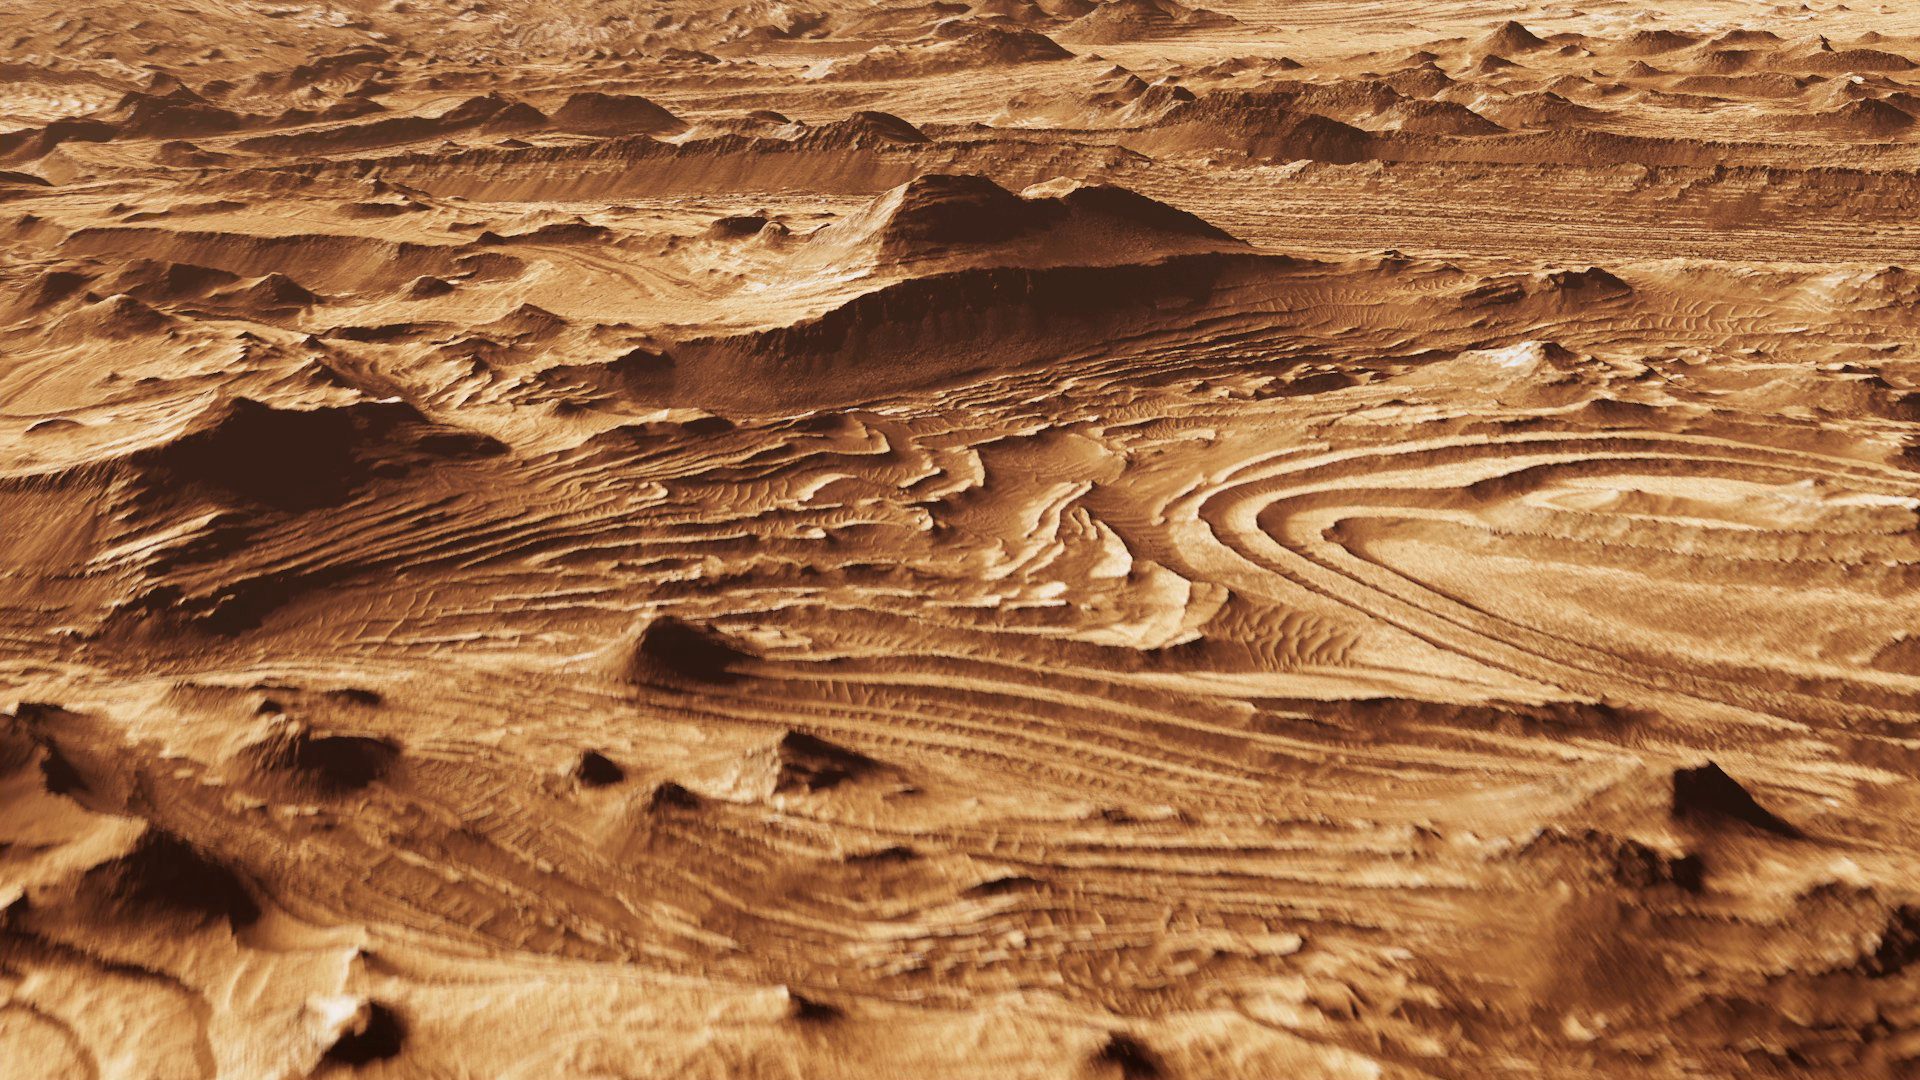 General 1920x1080 Mars planet landscape mountains space